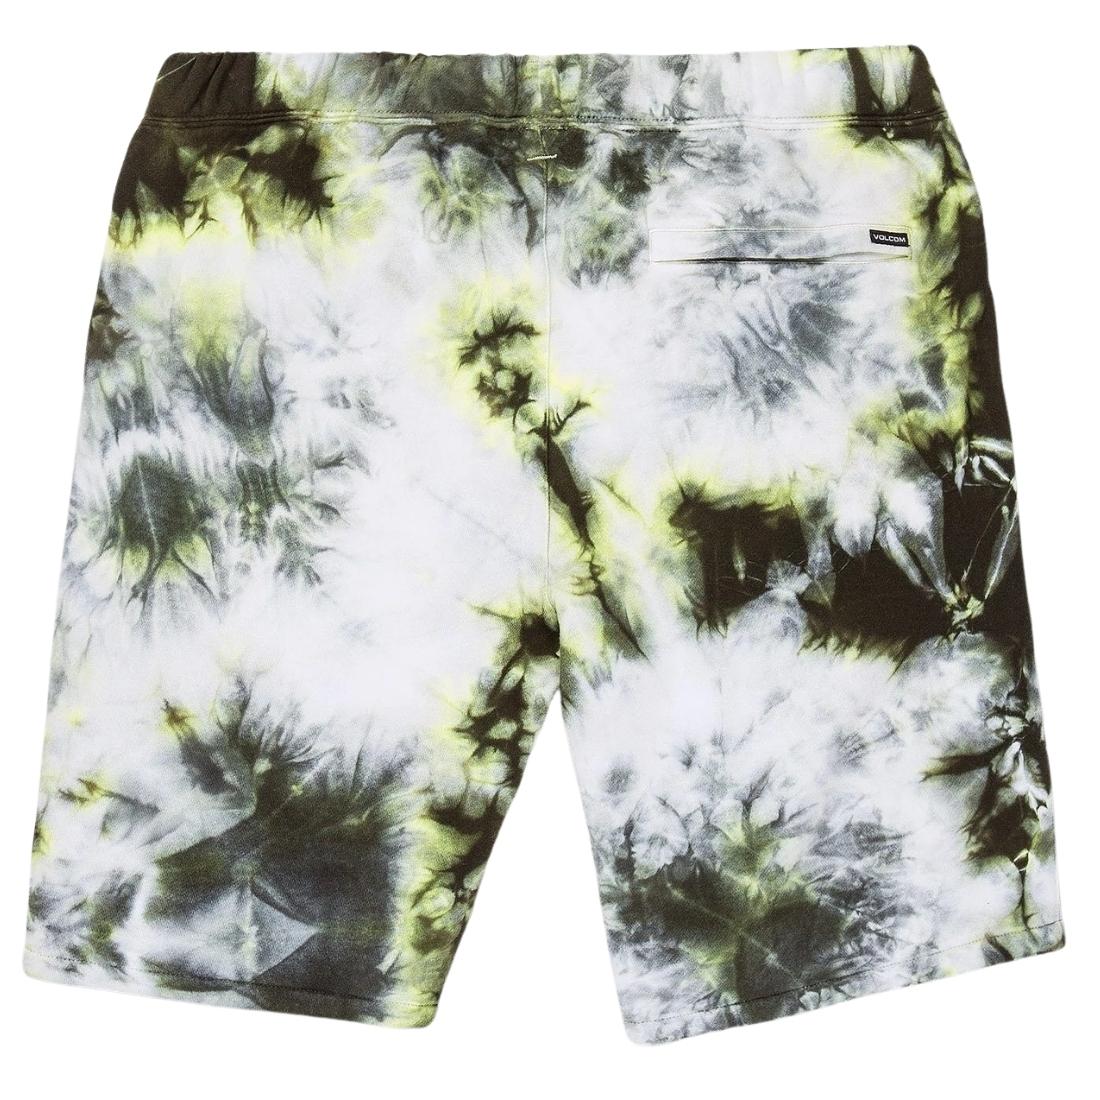 Volcom Iconic Stone Plus Fleece Short - Lime Tie Dye - Mens Gym Shorts by Volcom